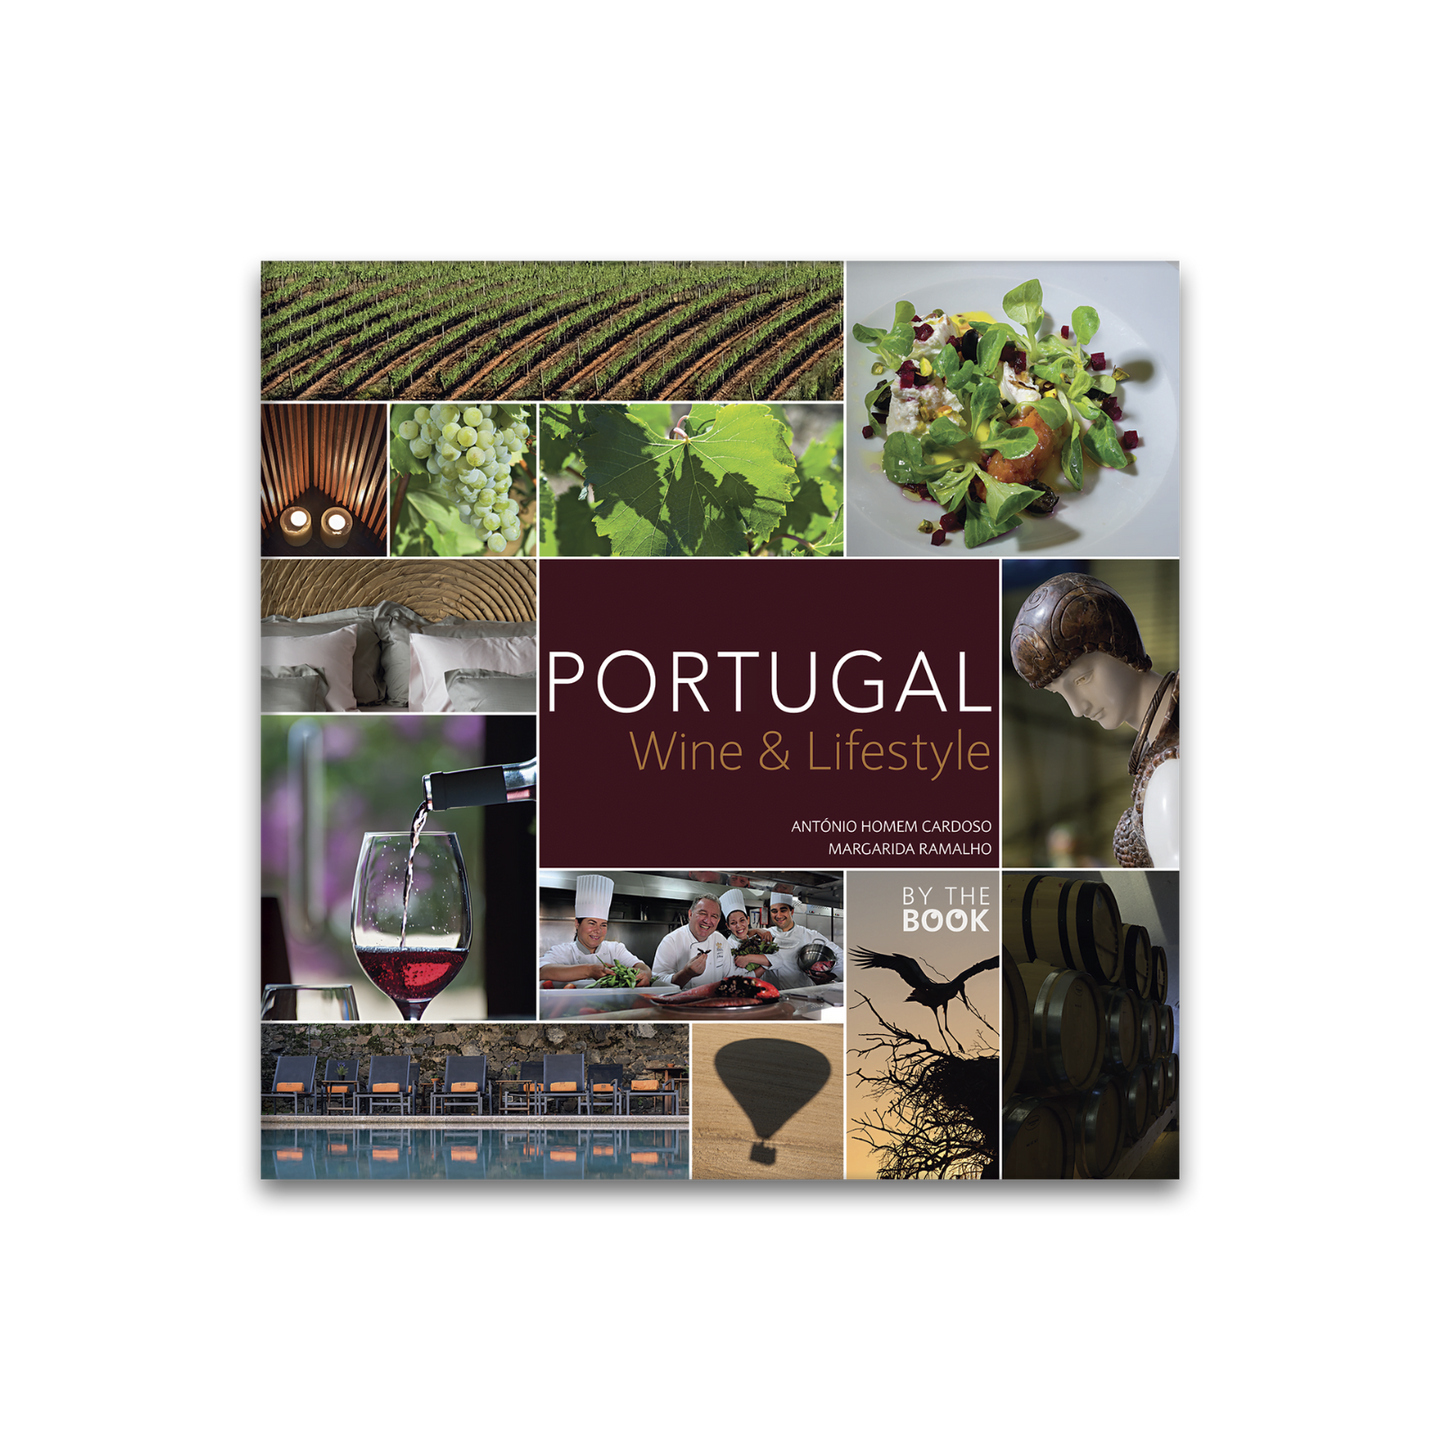 Portugal - VWines & Lifestyle